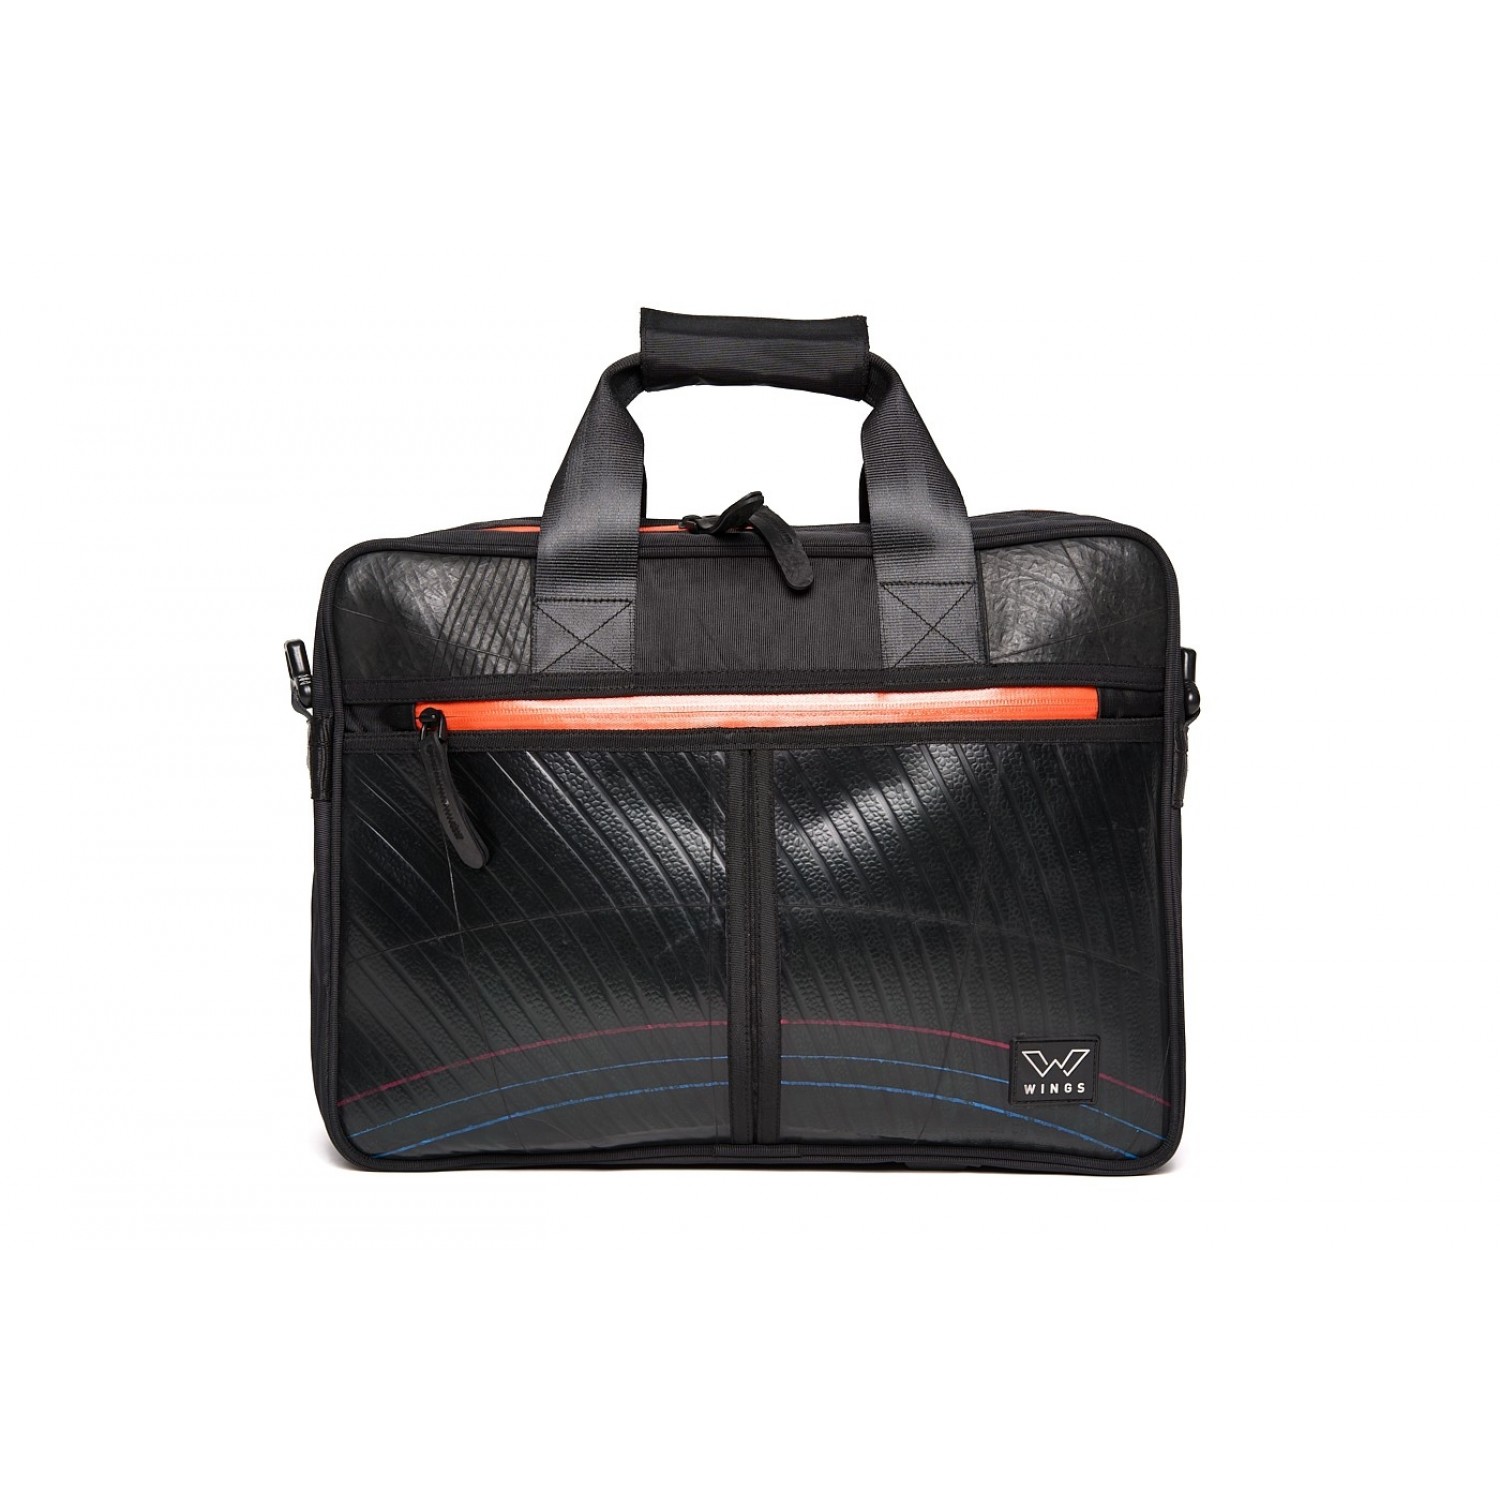 Ecowings Laptop Bag Elegant Eagle, orange zipper